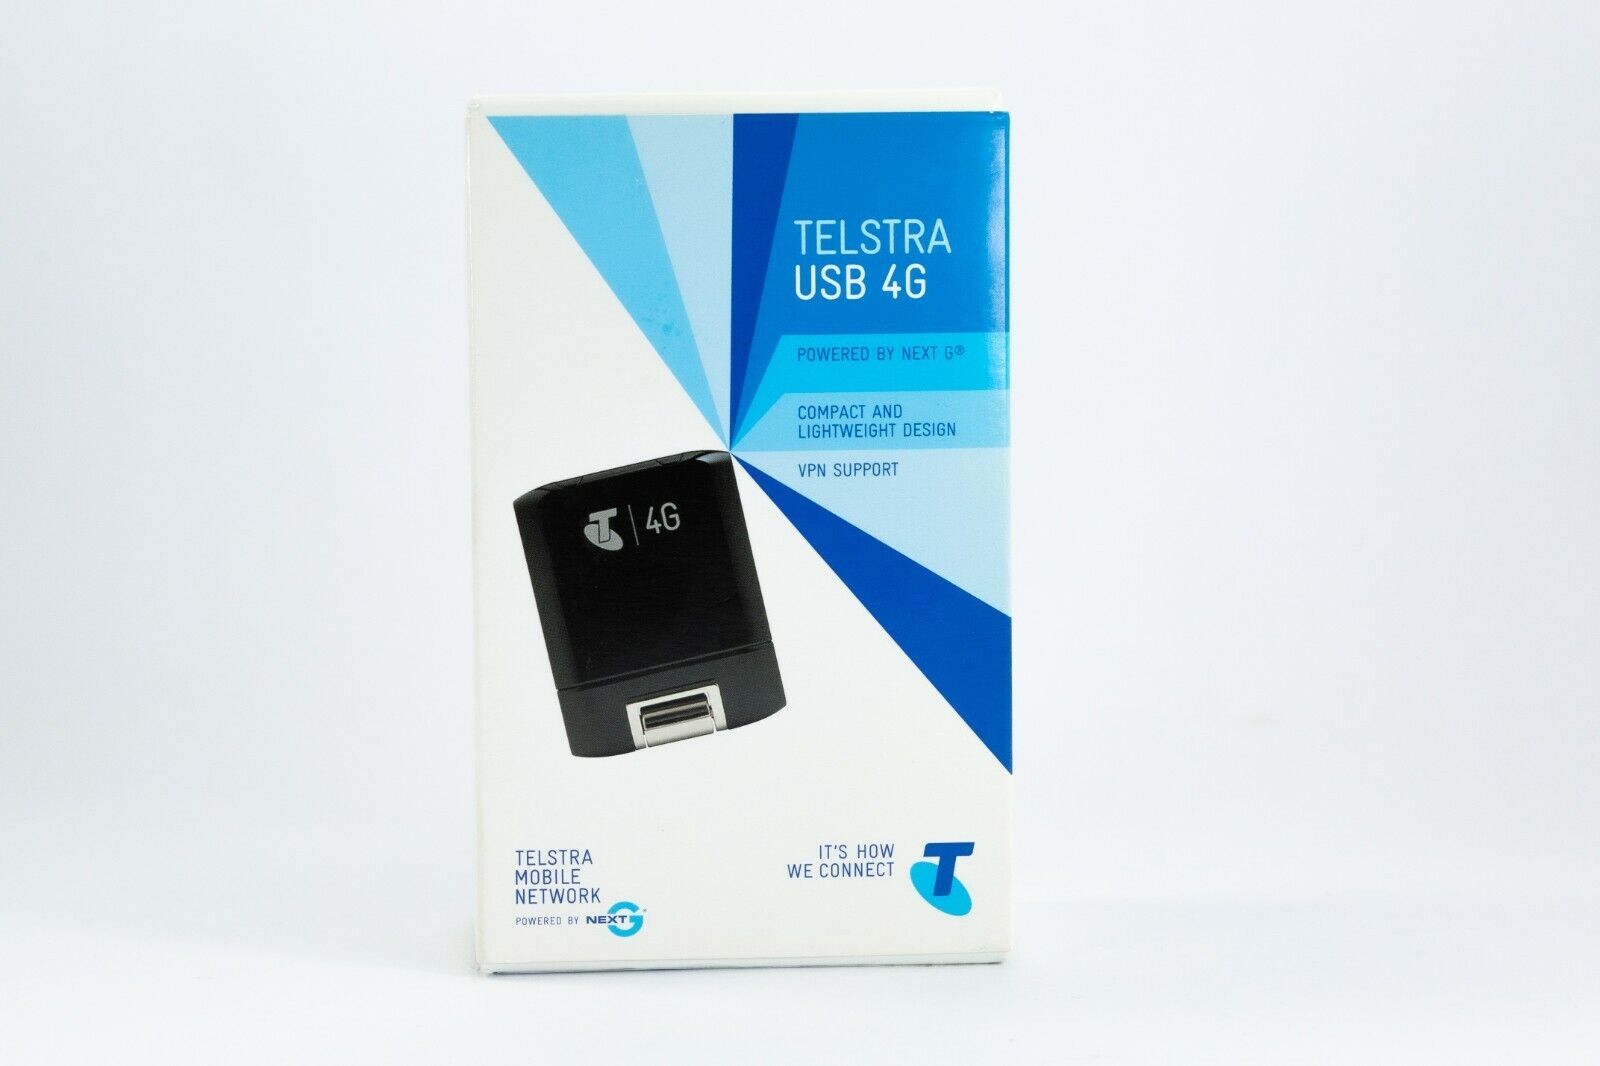 Telstra 4G Sierra AirCard 320U USB Wireless Internet Moblie Modem In Box 